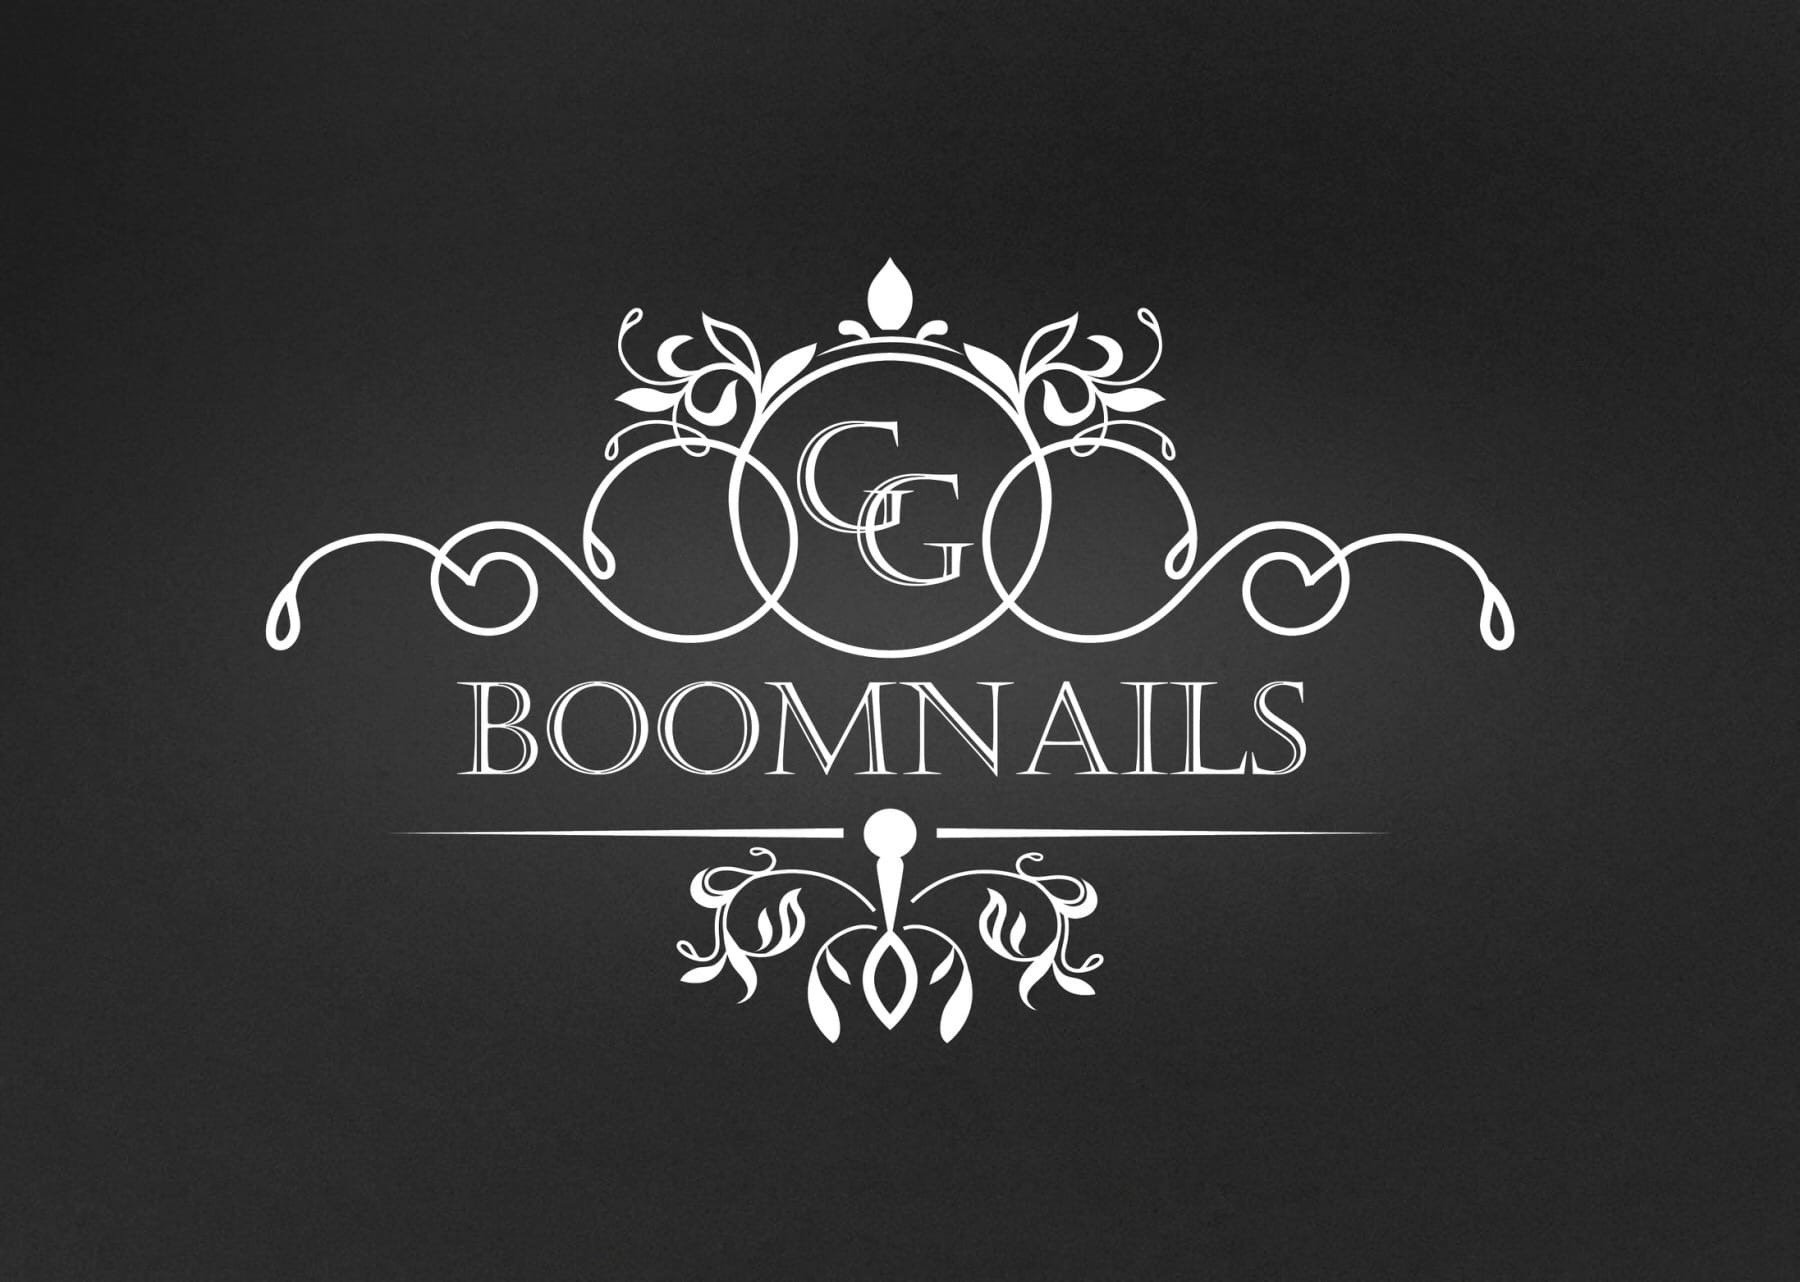 Школа студия ногтевого сервиса BOOMNAILS - Город Челябинск logo.png